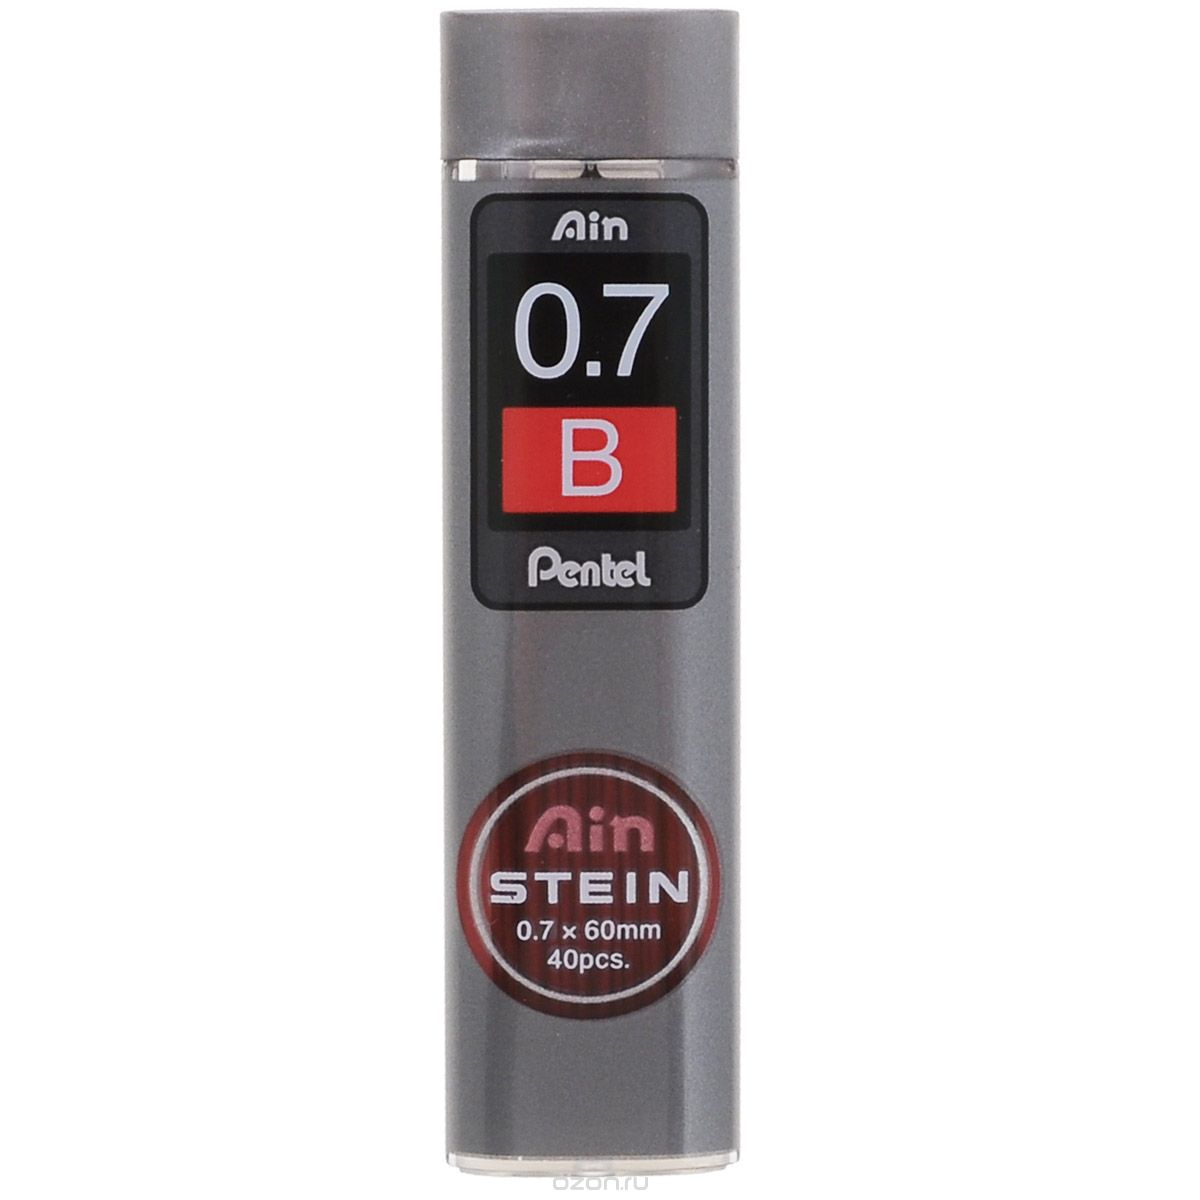 Pentel     Ain Stein B 0,7  40 